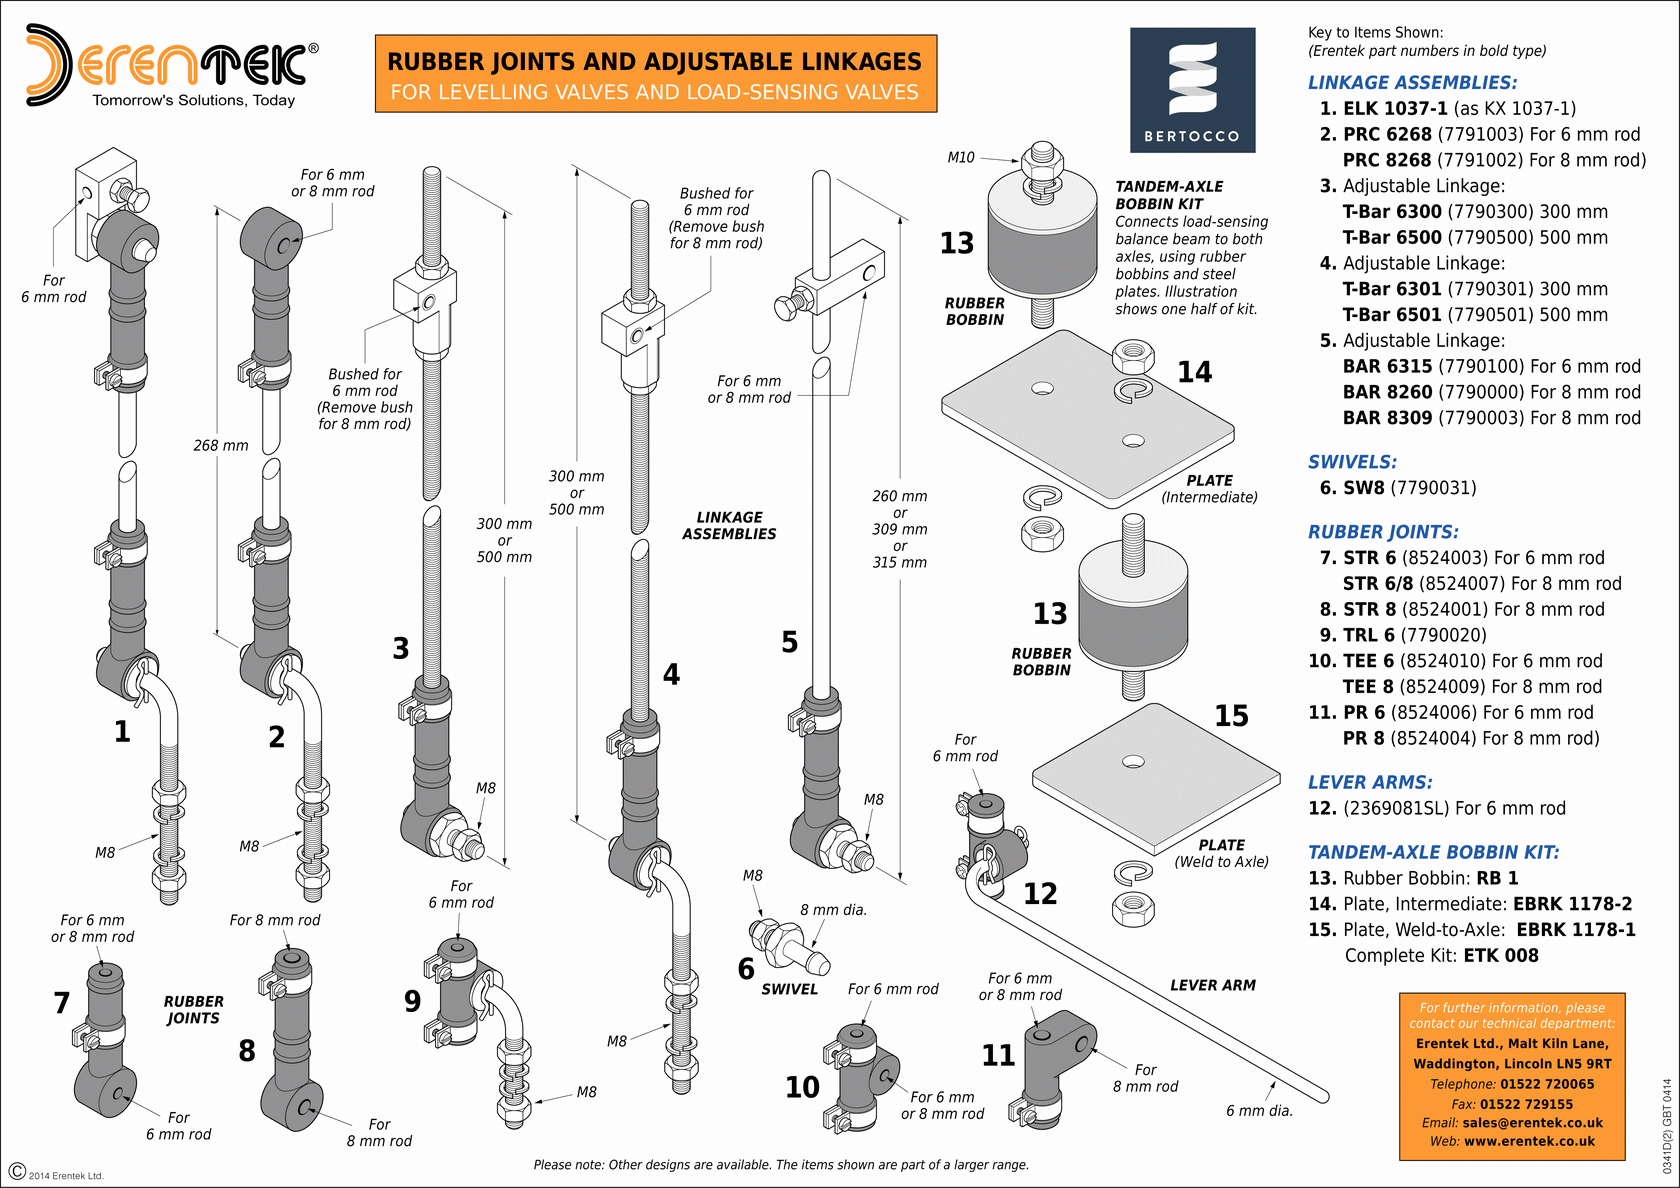 keyscan ca8500 wiring diagram